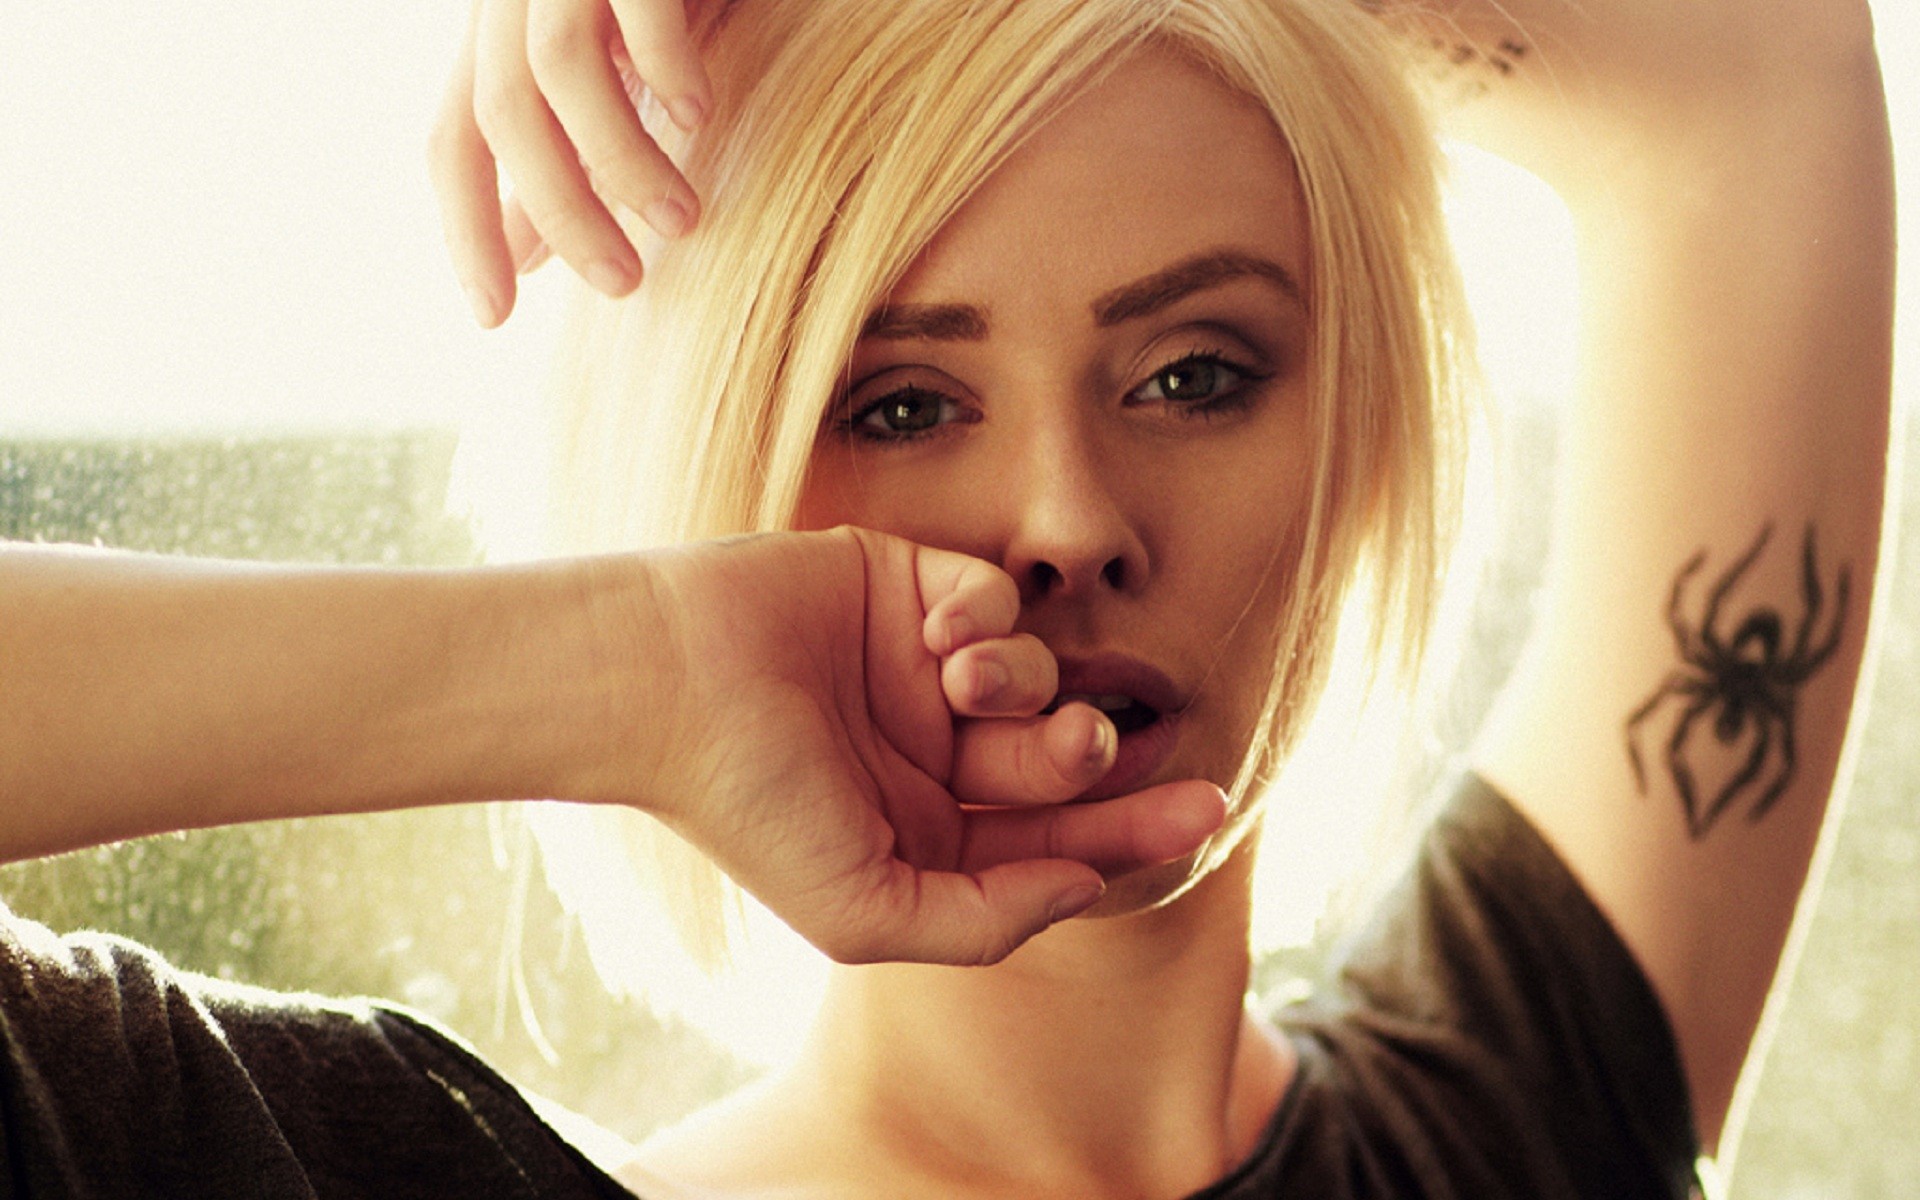 blondes, tattoos, women, models, Alysha Nett - desktop wallpaper